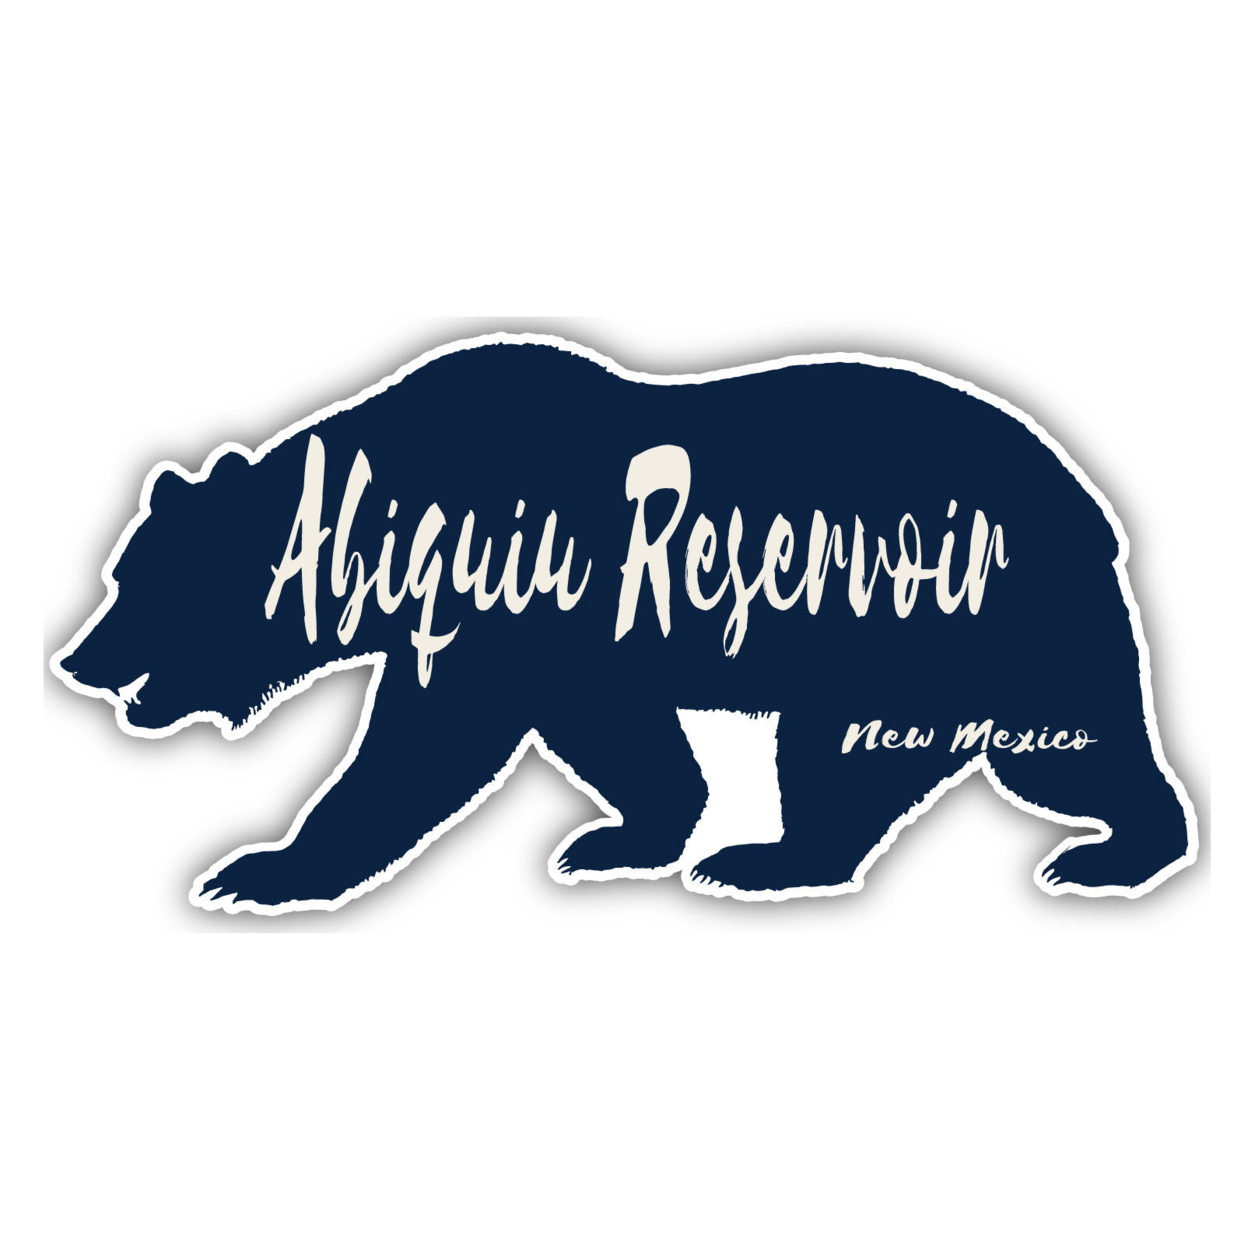 Abiquiu Reservoir New Mexico Souvenir Decorative Stickers (Choose Theme And Size) - 4-Pack, 4-Inch, Bear